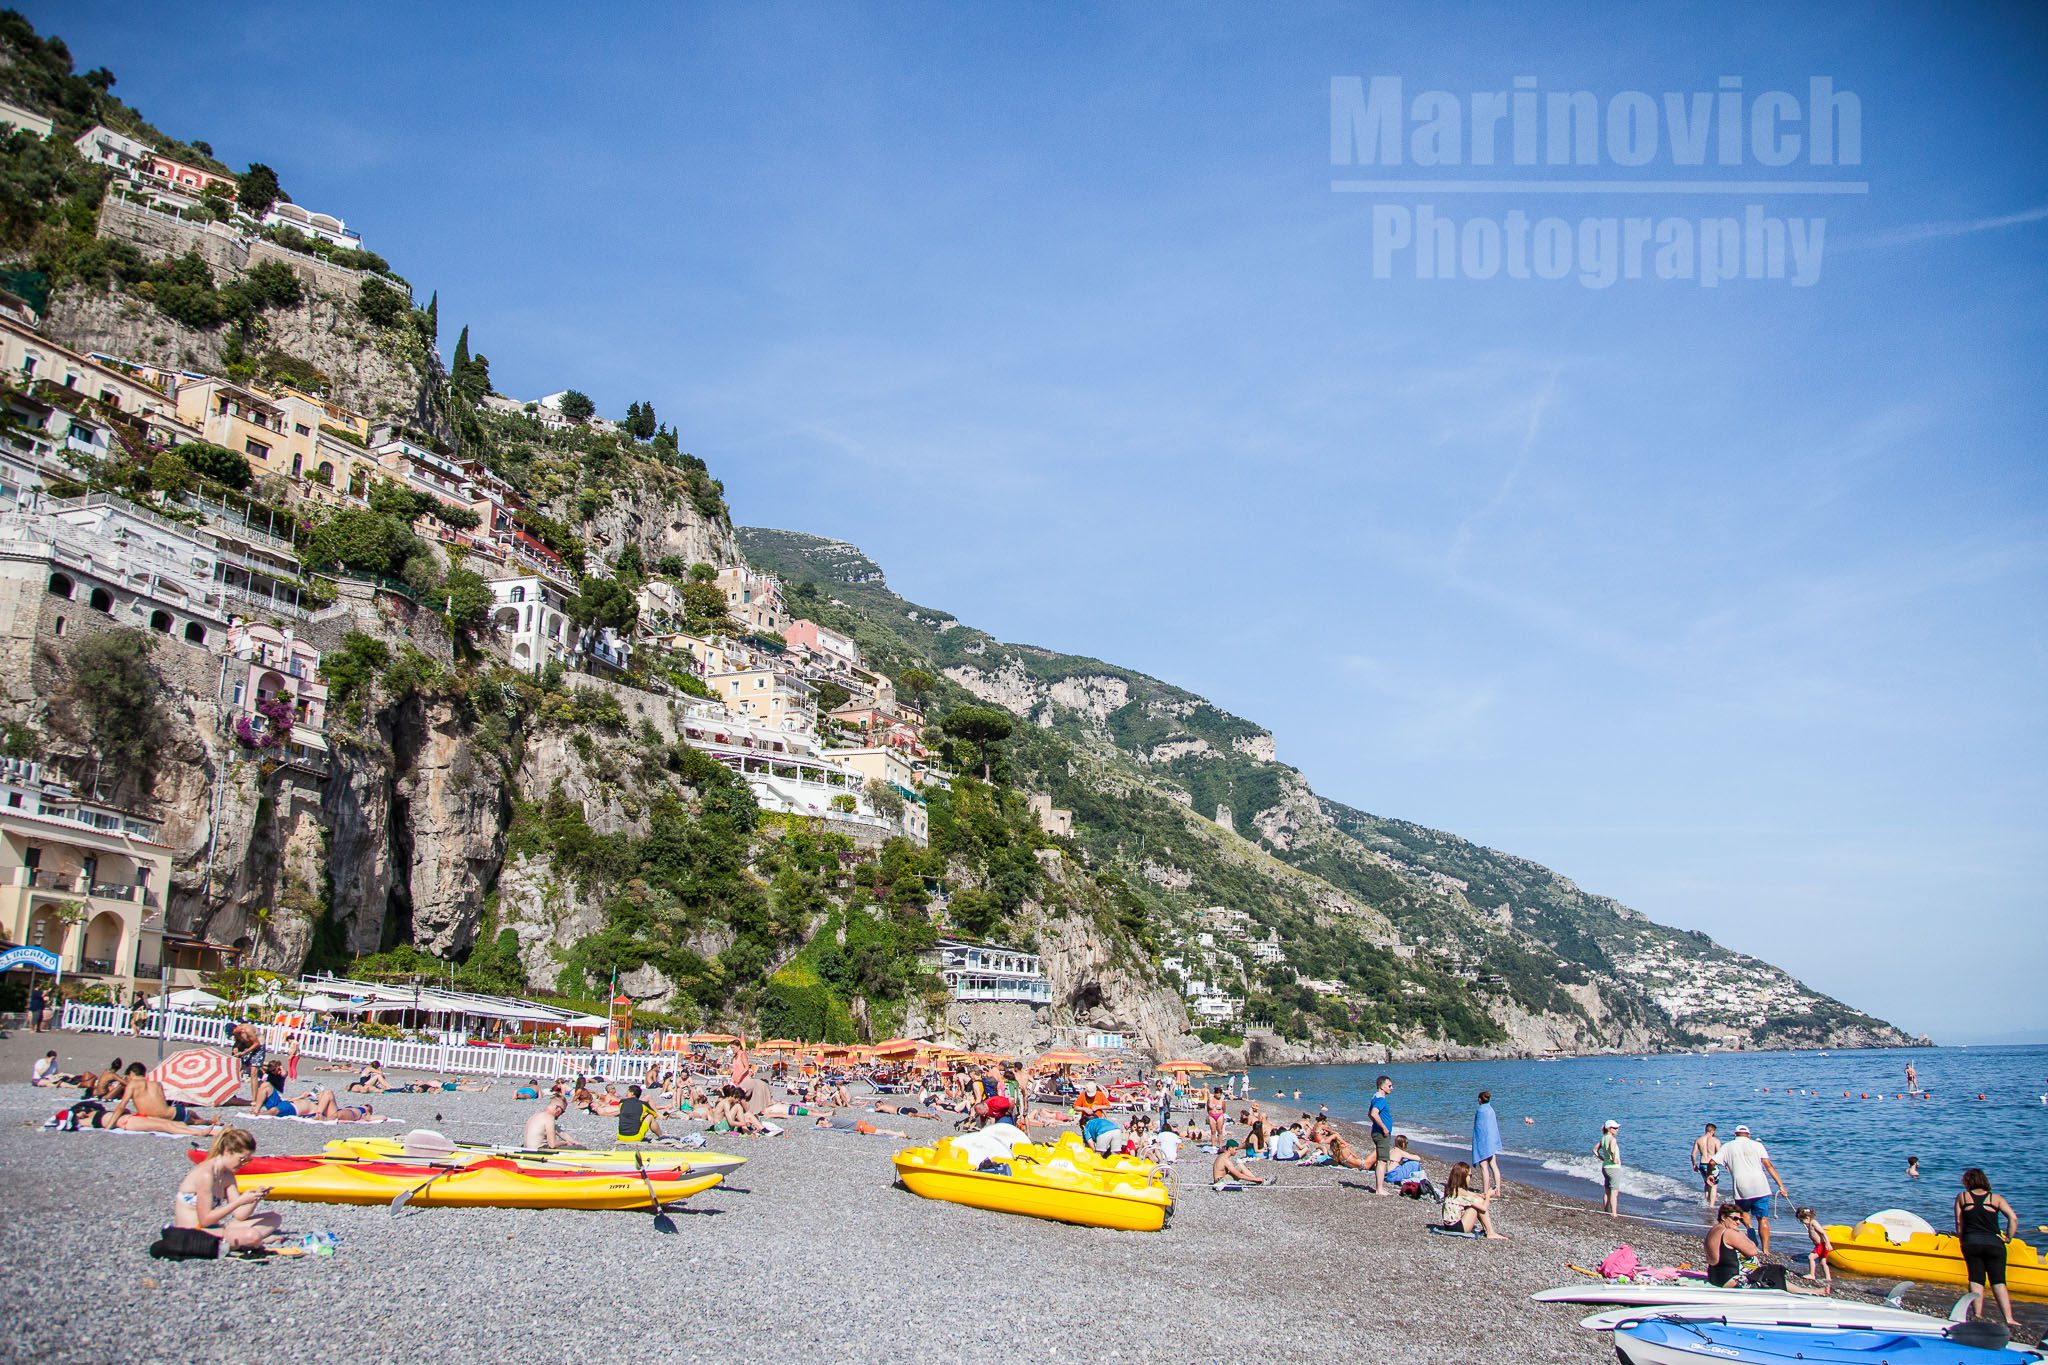 “Positano – Travel Photography – Marinovich Photography”